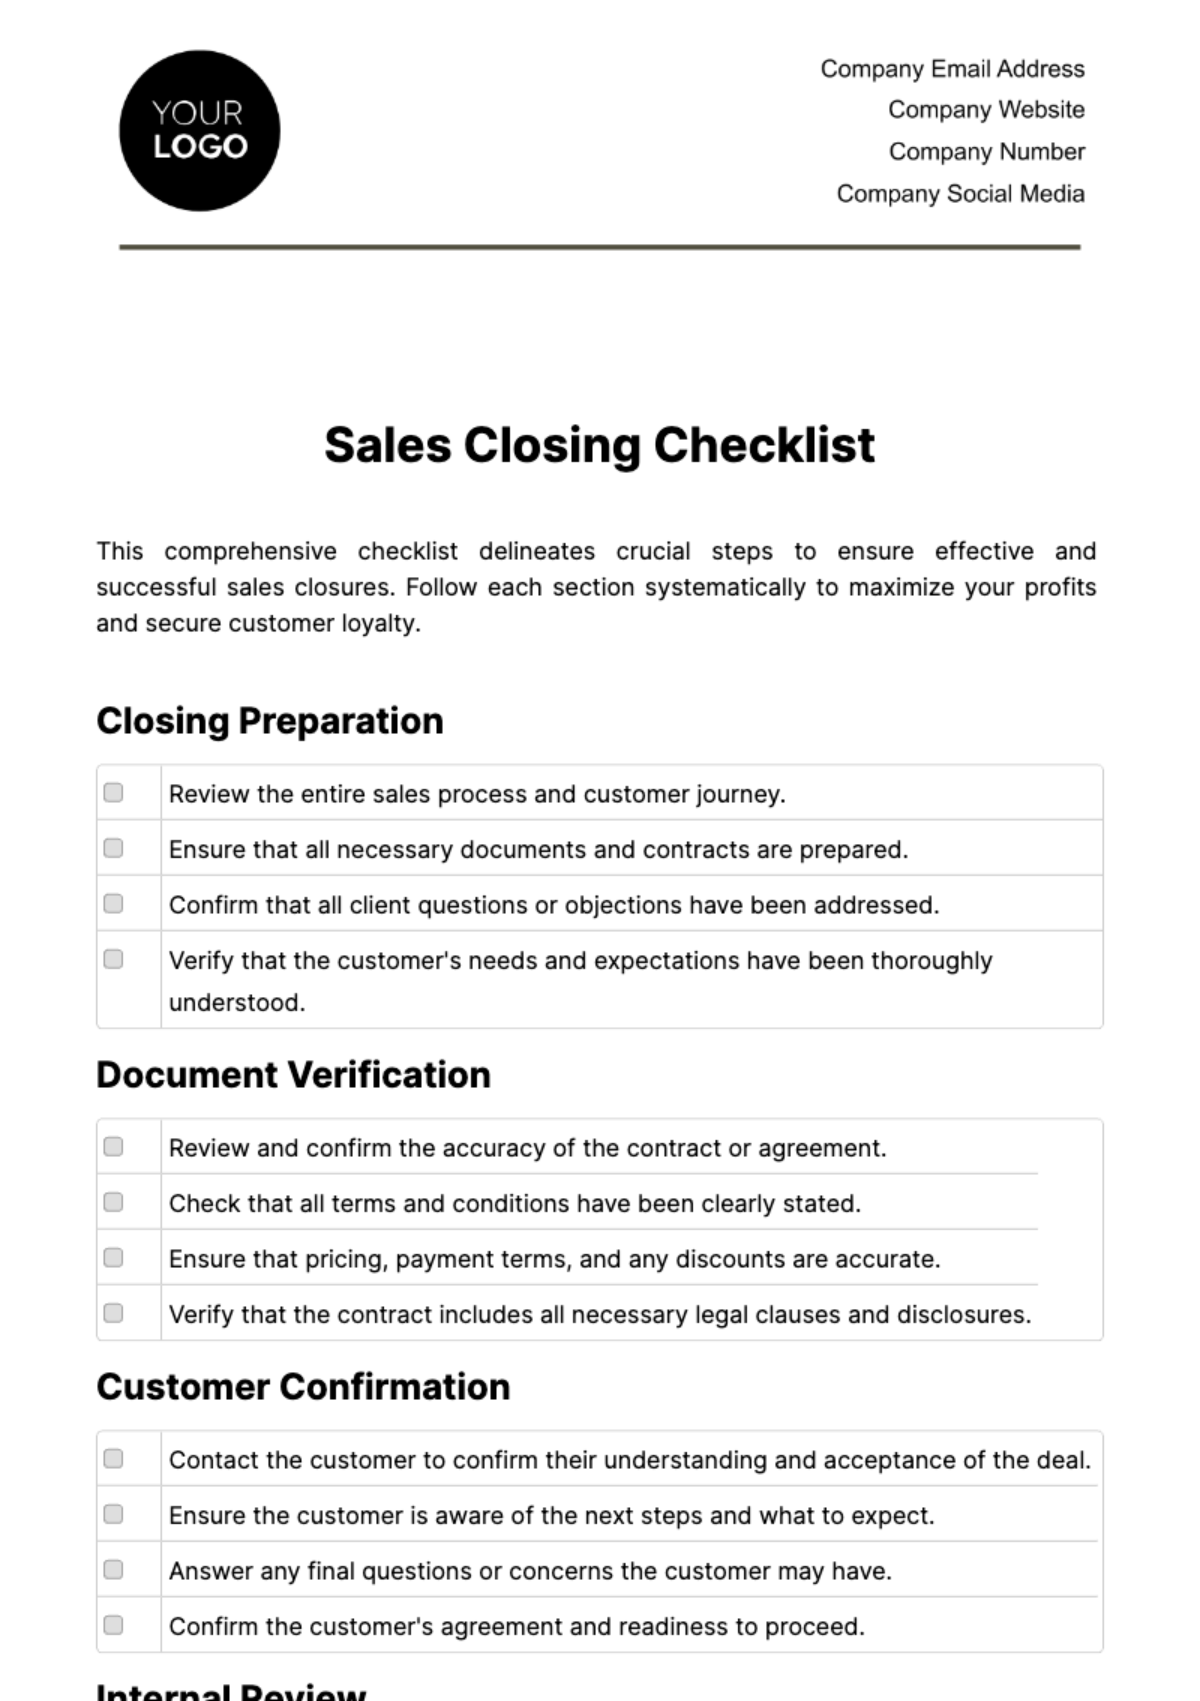 Sales Closing Checklist Template